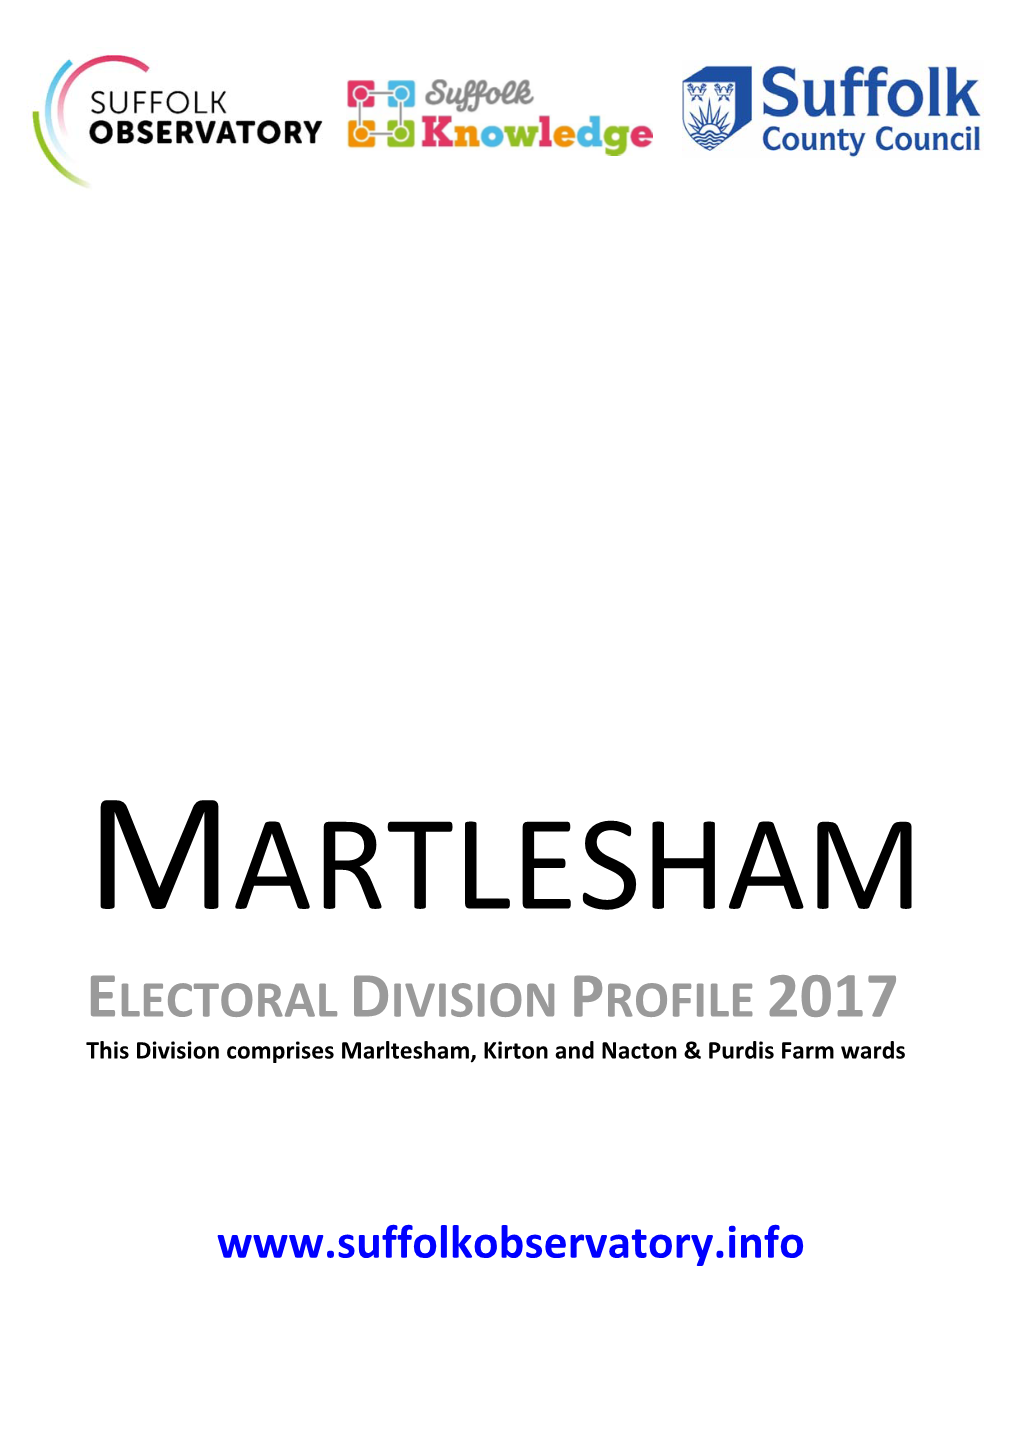 MARTLESHAM ELECTORAL DIVISION PROFILE 2017 This Division Comprises Marltesham, Kirton and Nacton & Purdis Farm Wards